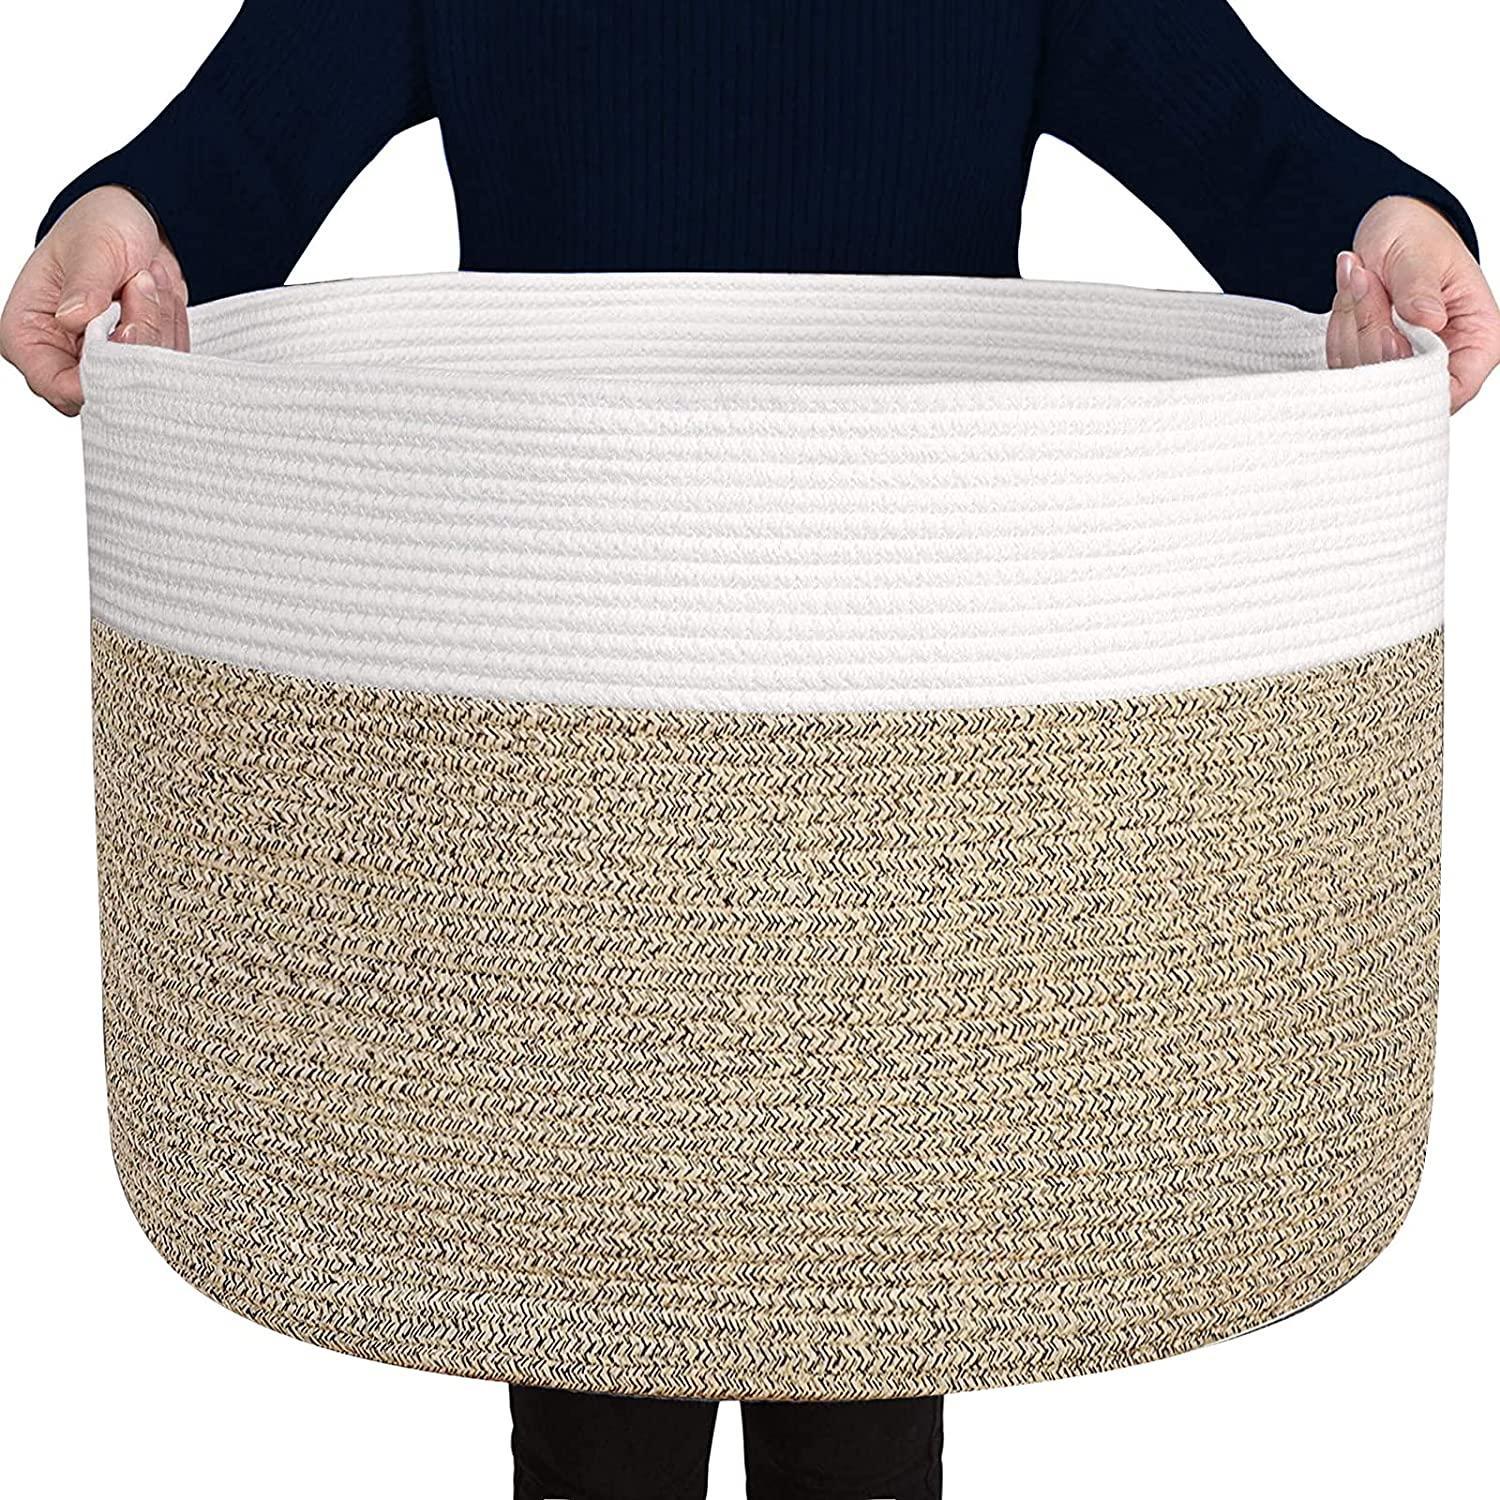 Extra Large Laundry Basket, XXXL Cotton Rope Woven Basket for Blankets Storage Basket